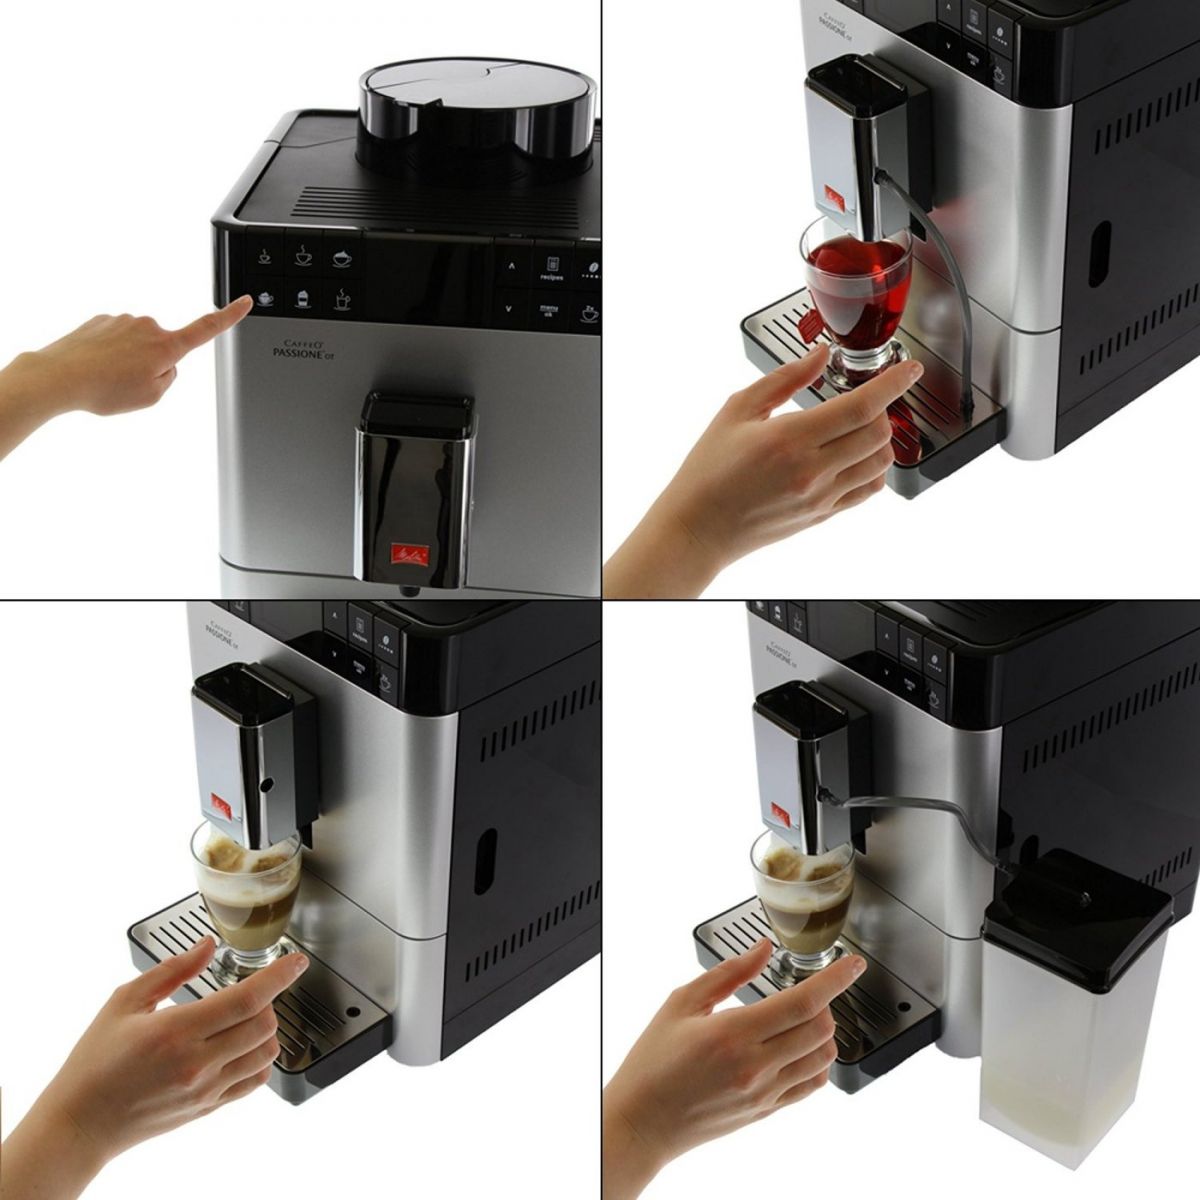 DIFFERENTATION Semi-AUTOMATIC COFFEE MACHINE AND AUTOMATIC COFFEE MACHINE